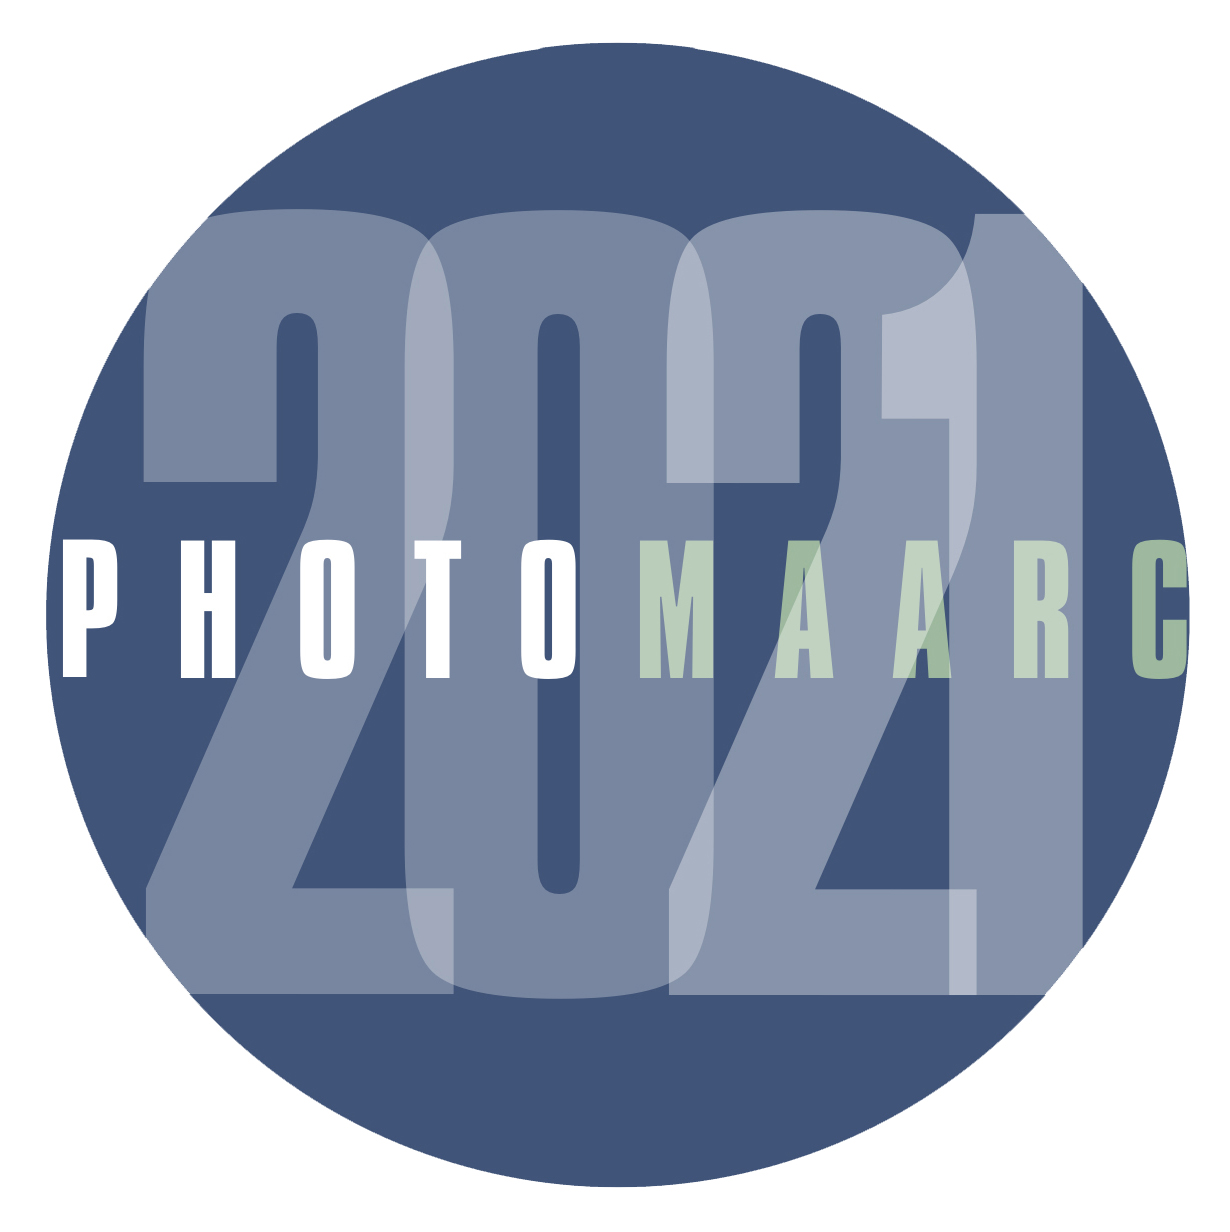 PHOTOMAARC 2021 _ 1925/1945 Architetture del Moderno in Italia